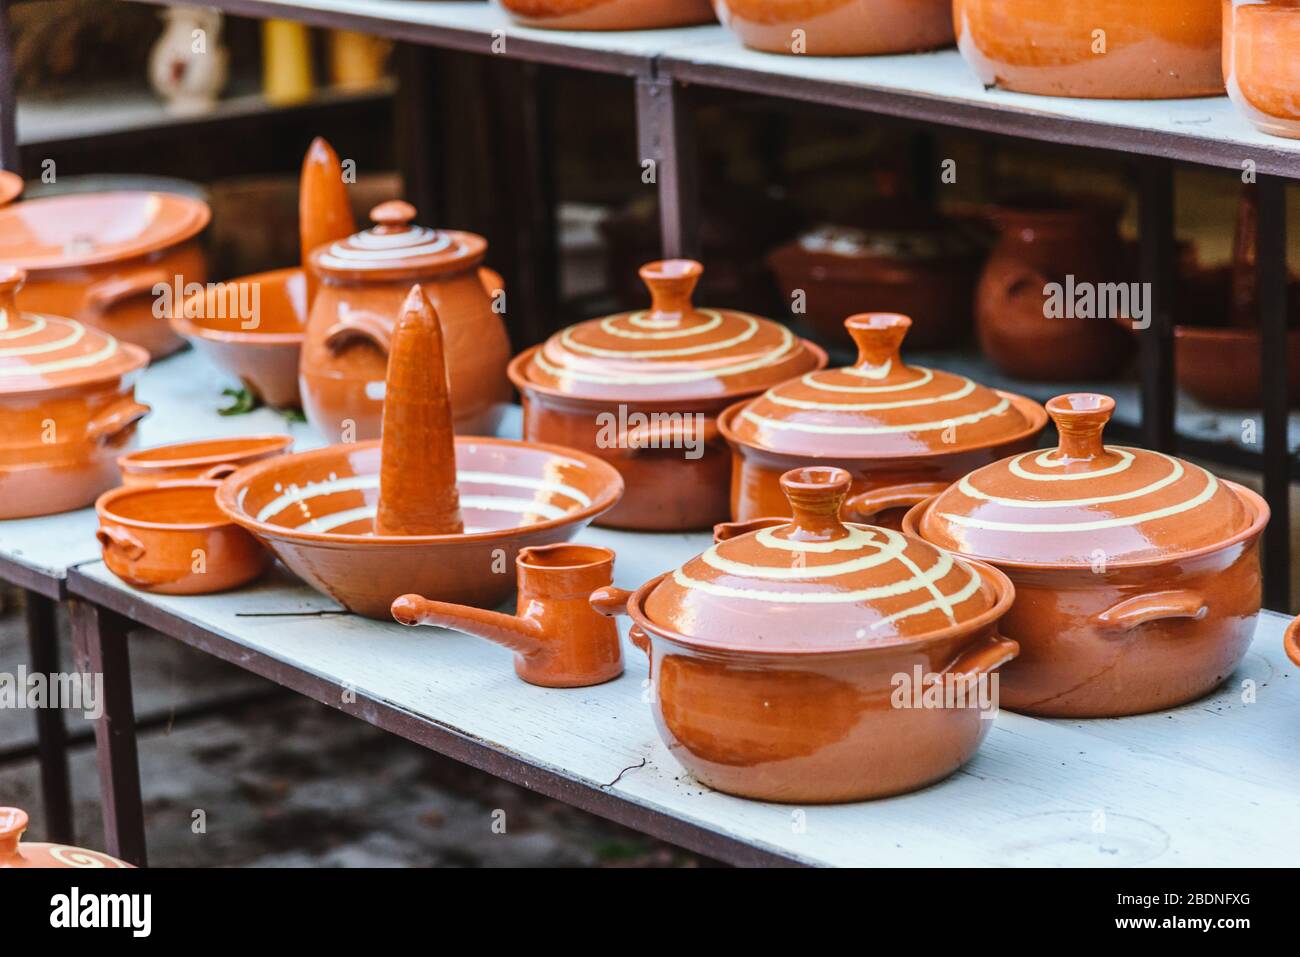 Schöne handgemachte Kochtöpfe. Keramik / Keramik Objekte Stockfotografie -  Alamy